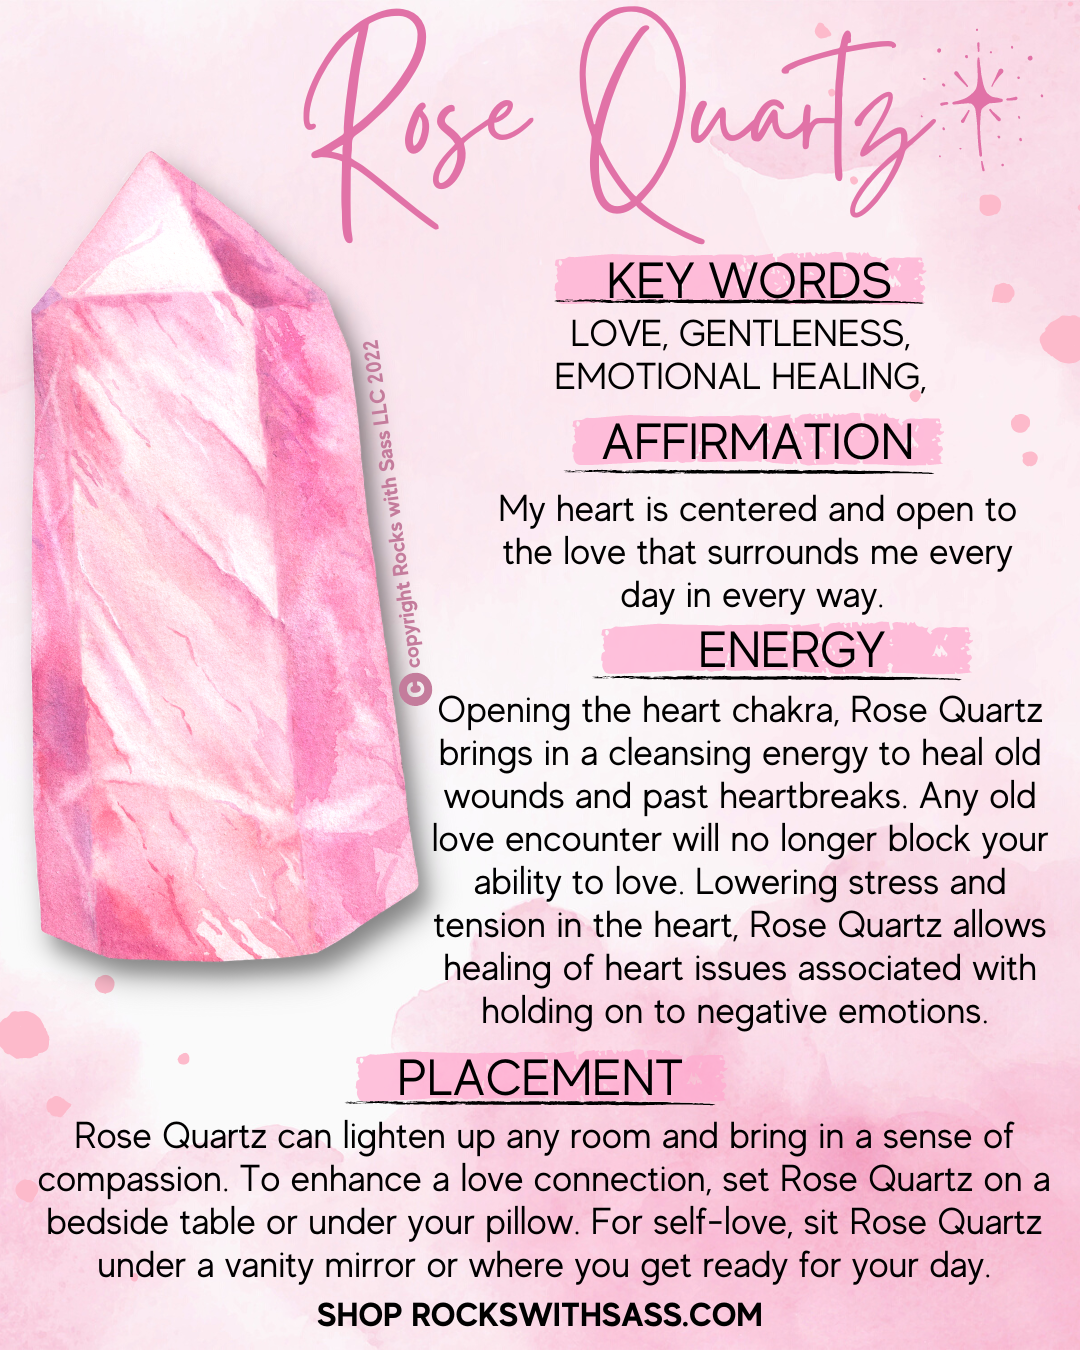 Rose Quartz Meaning, Properties & Benefits